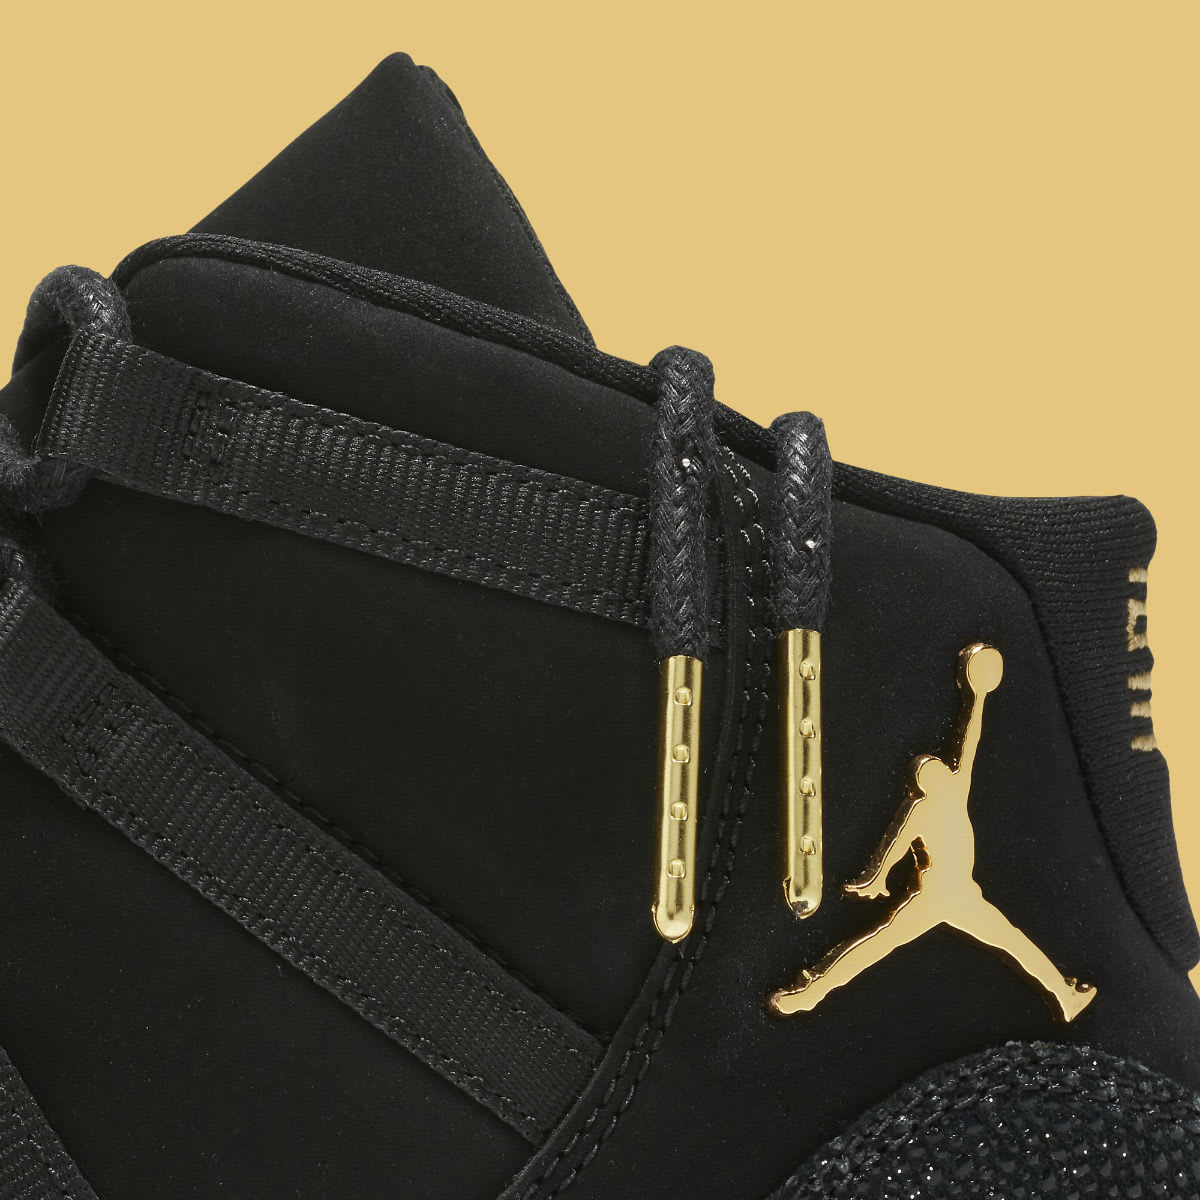 Air Jordan 11 XI Heiress Black Release Date 852625-030 Laces